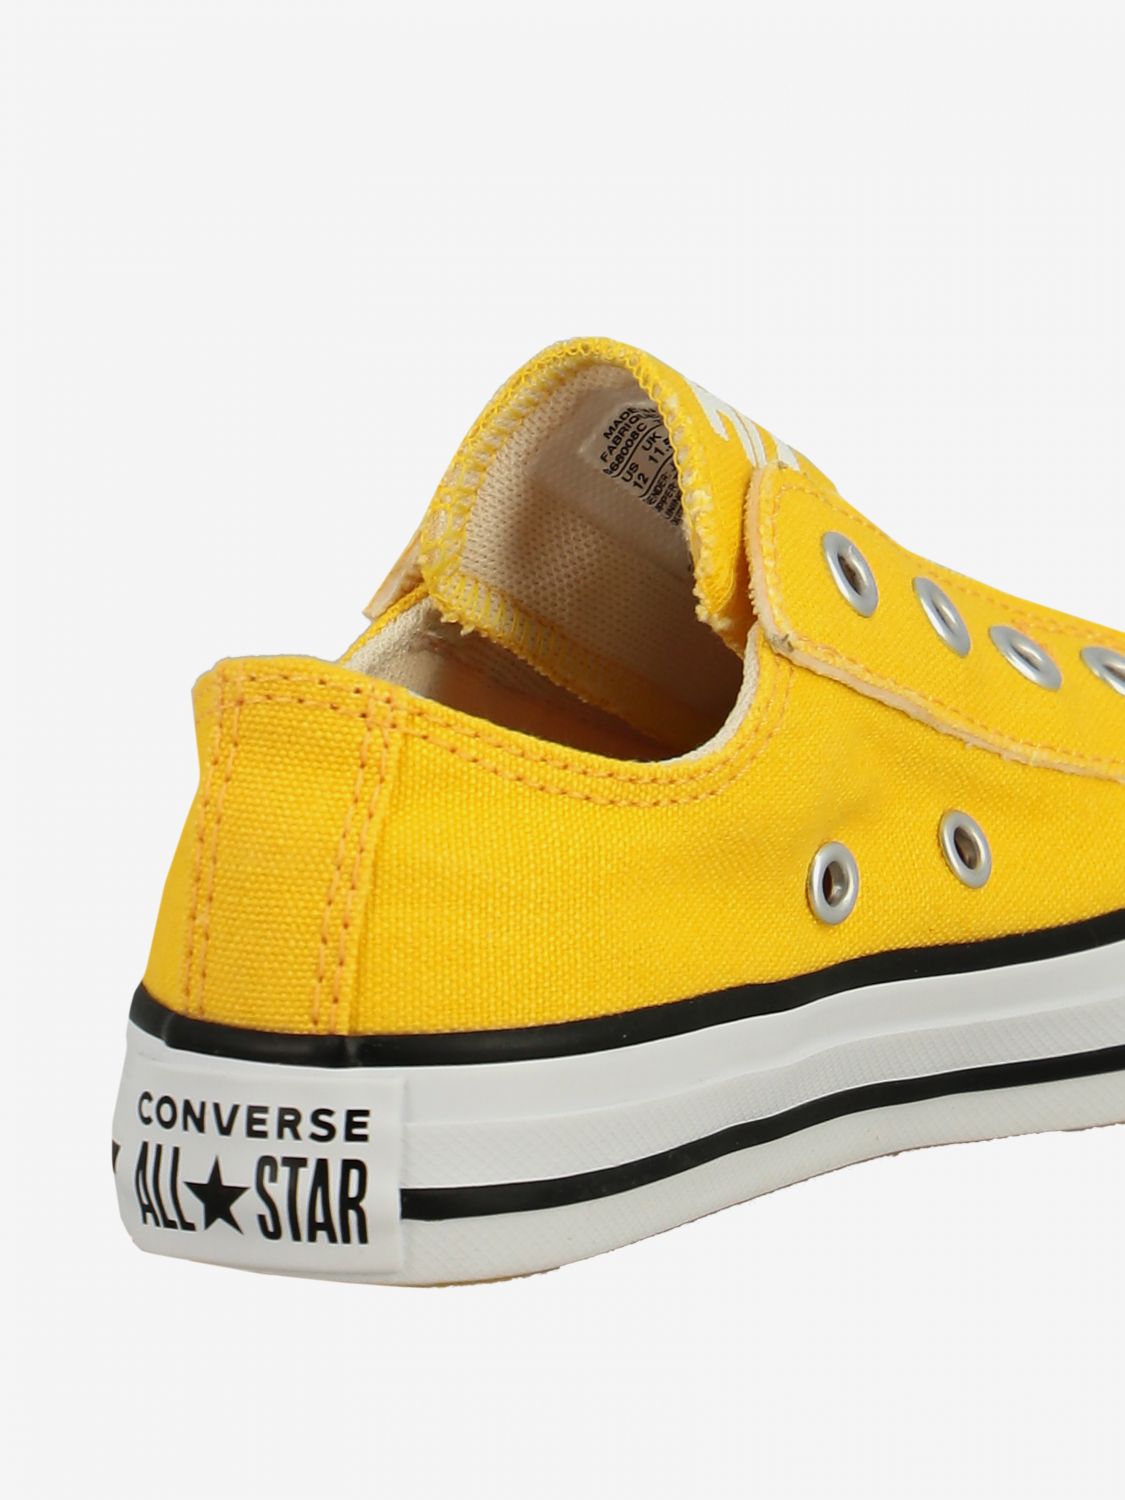 converse all star yellow uk